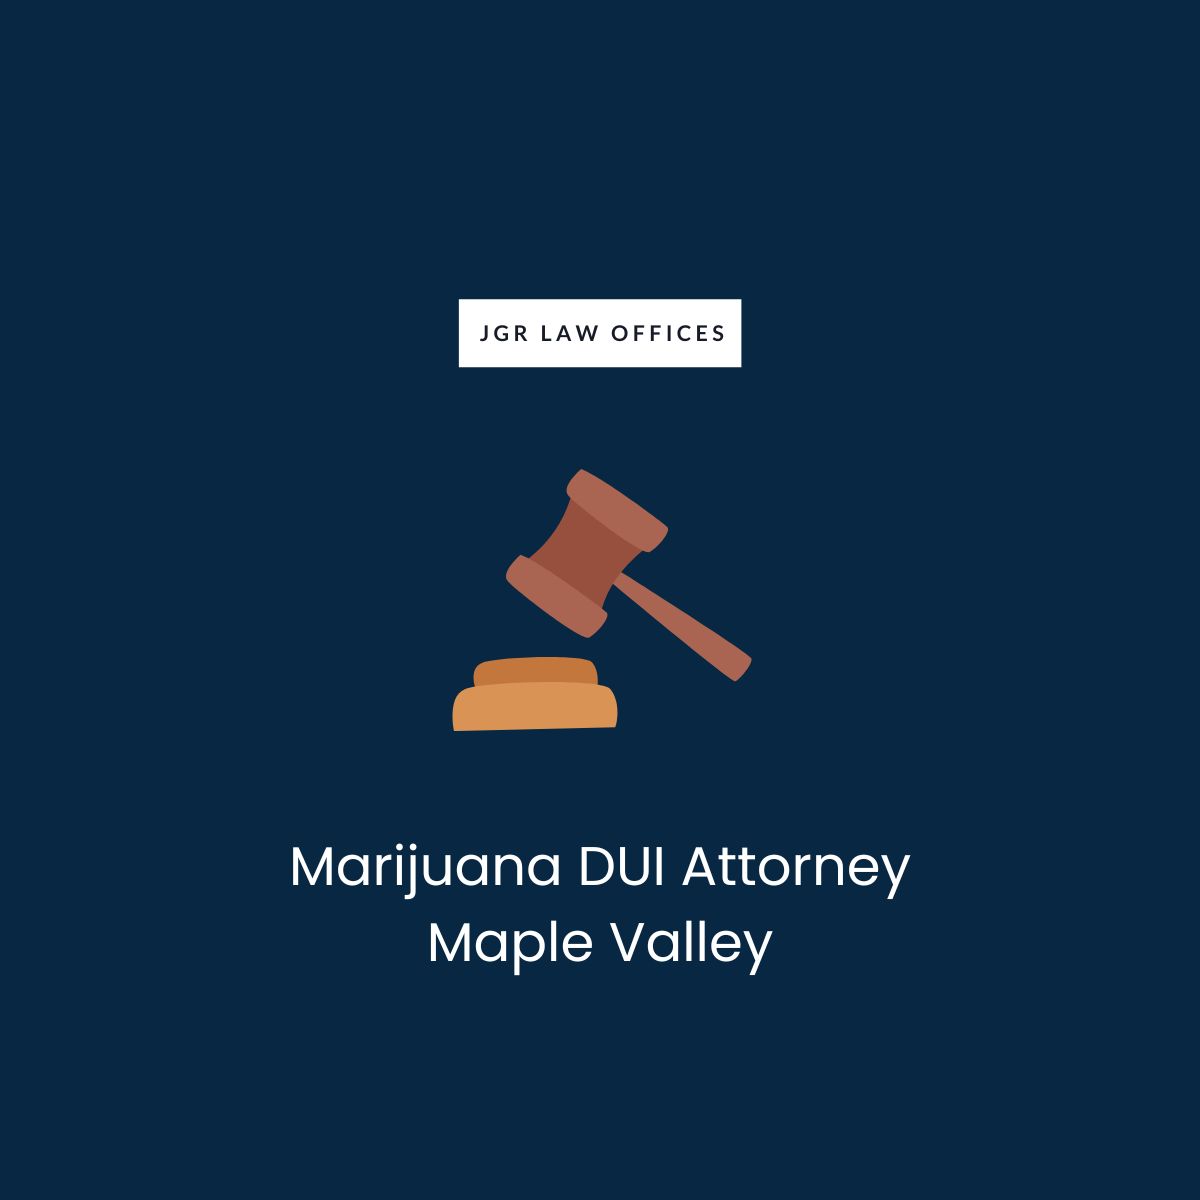 Marijuana DUI Lawyer Maple Valley Marijuana DUI Marijuana DUI